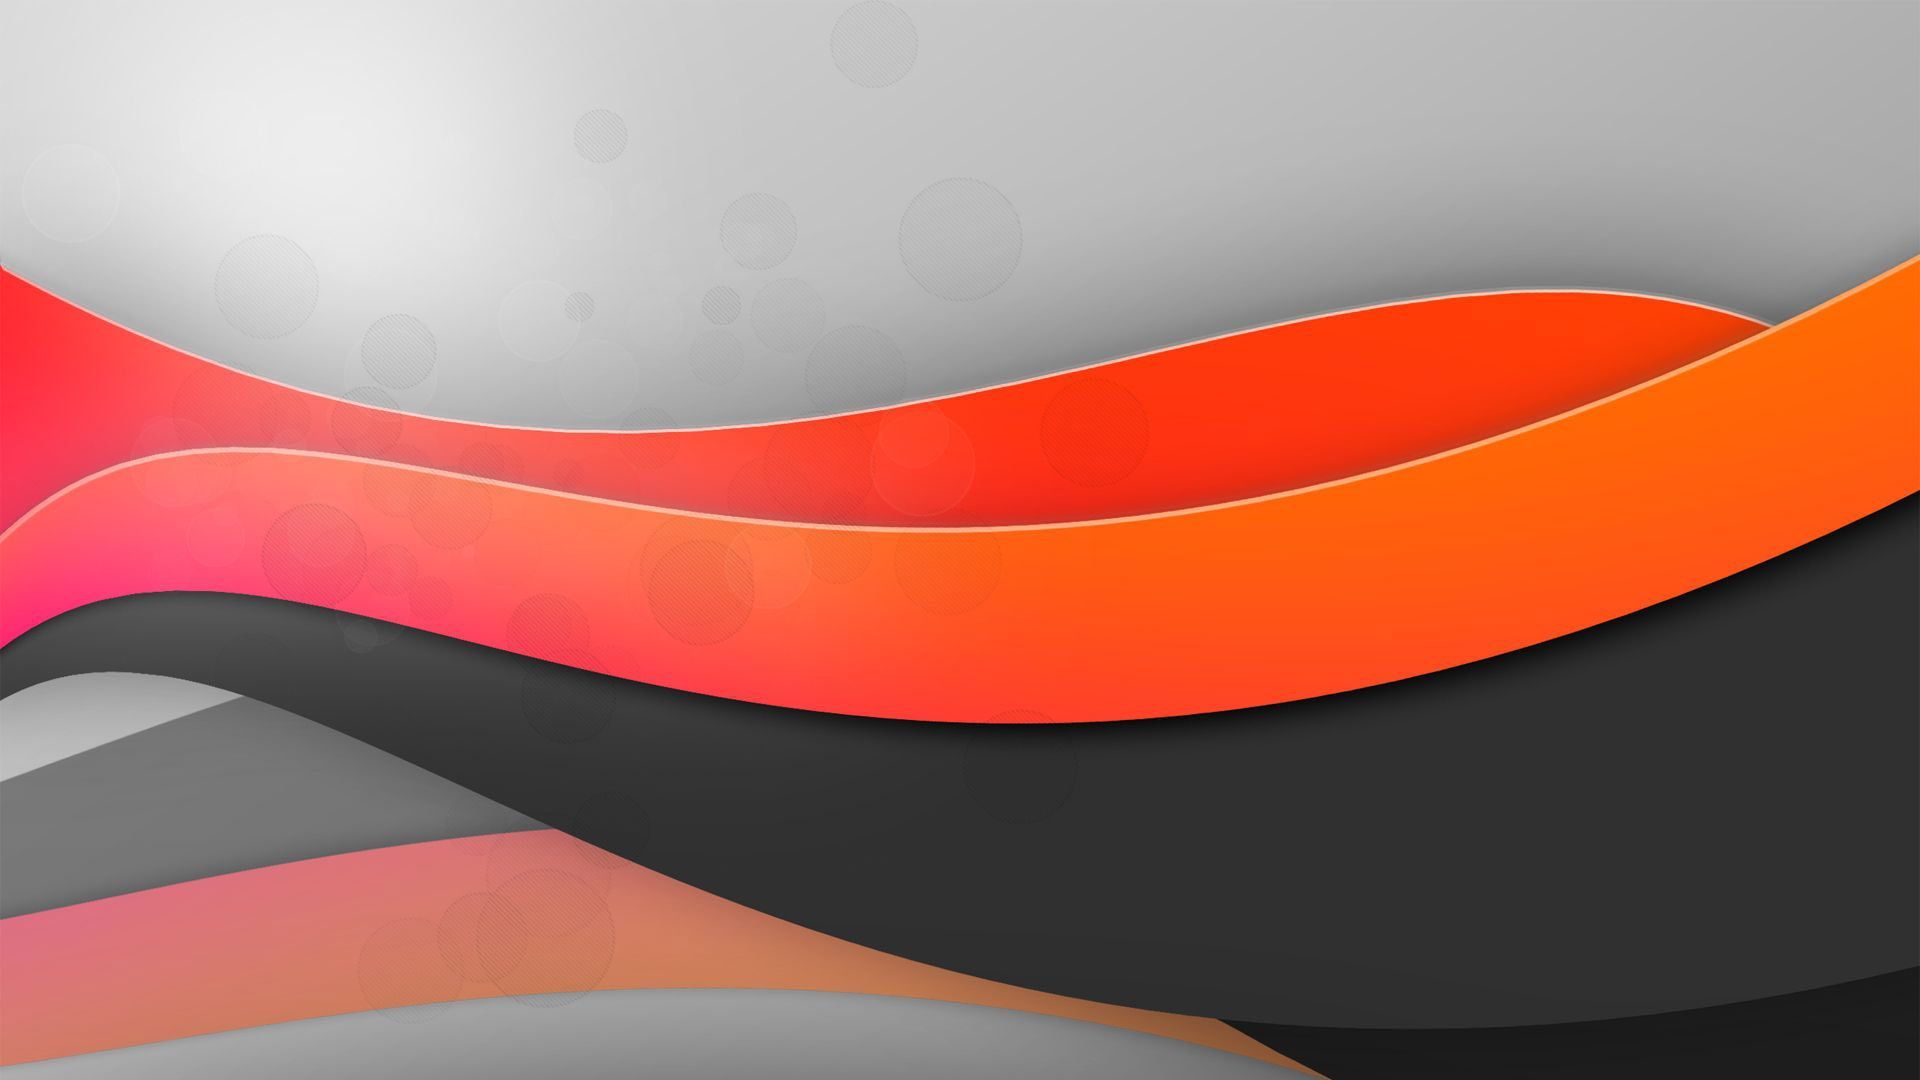 Black And Orange download wallpaper image